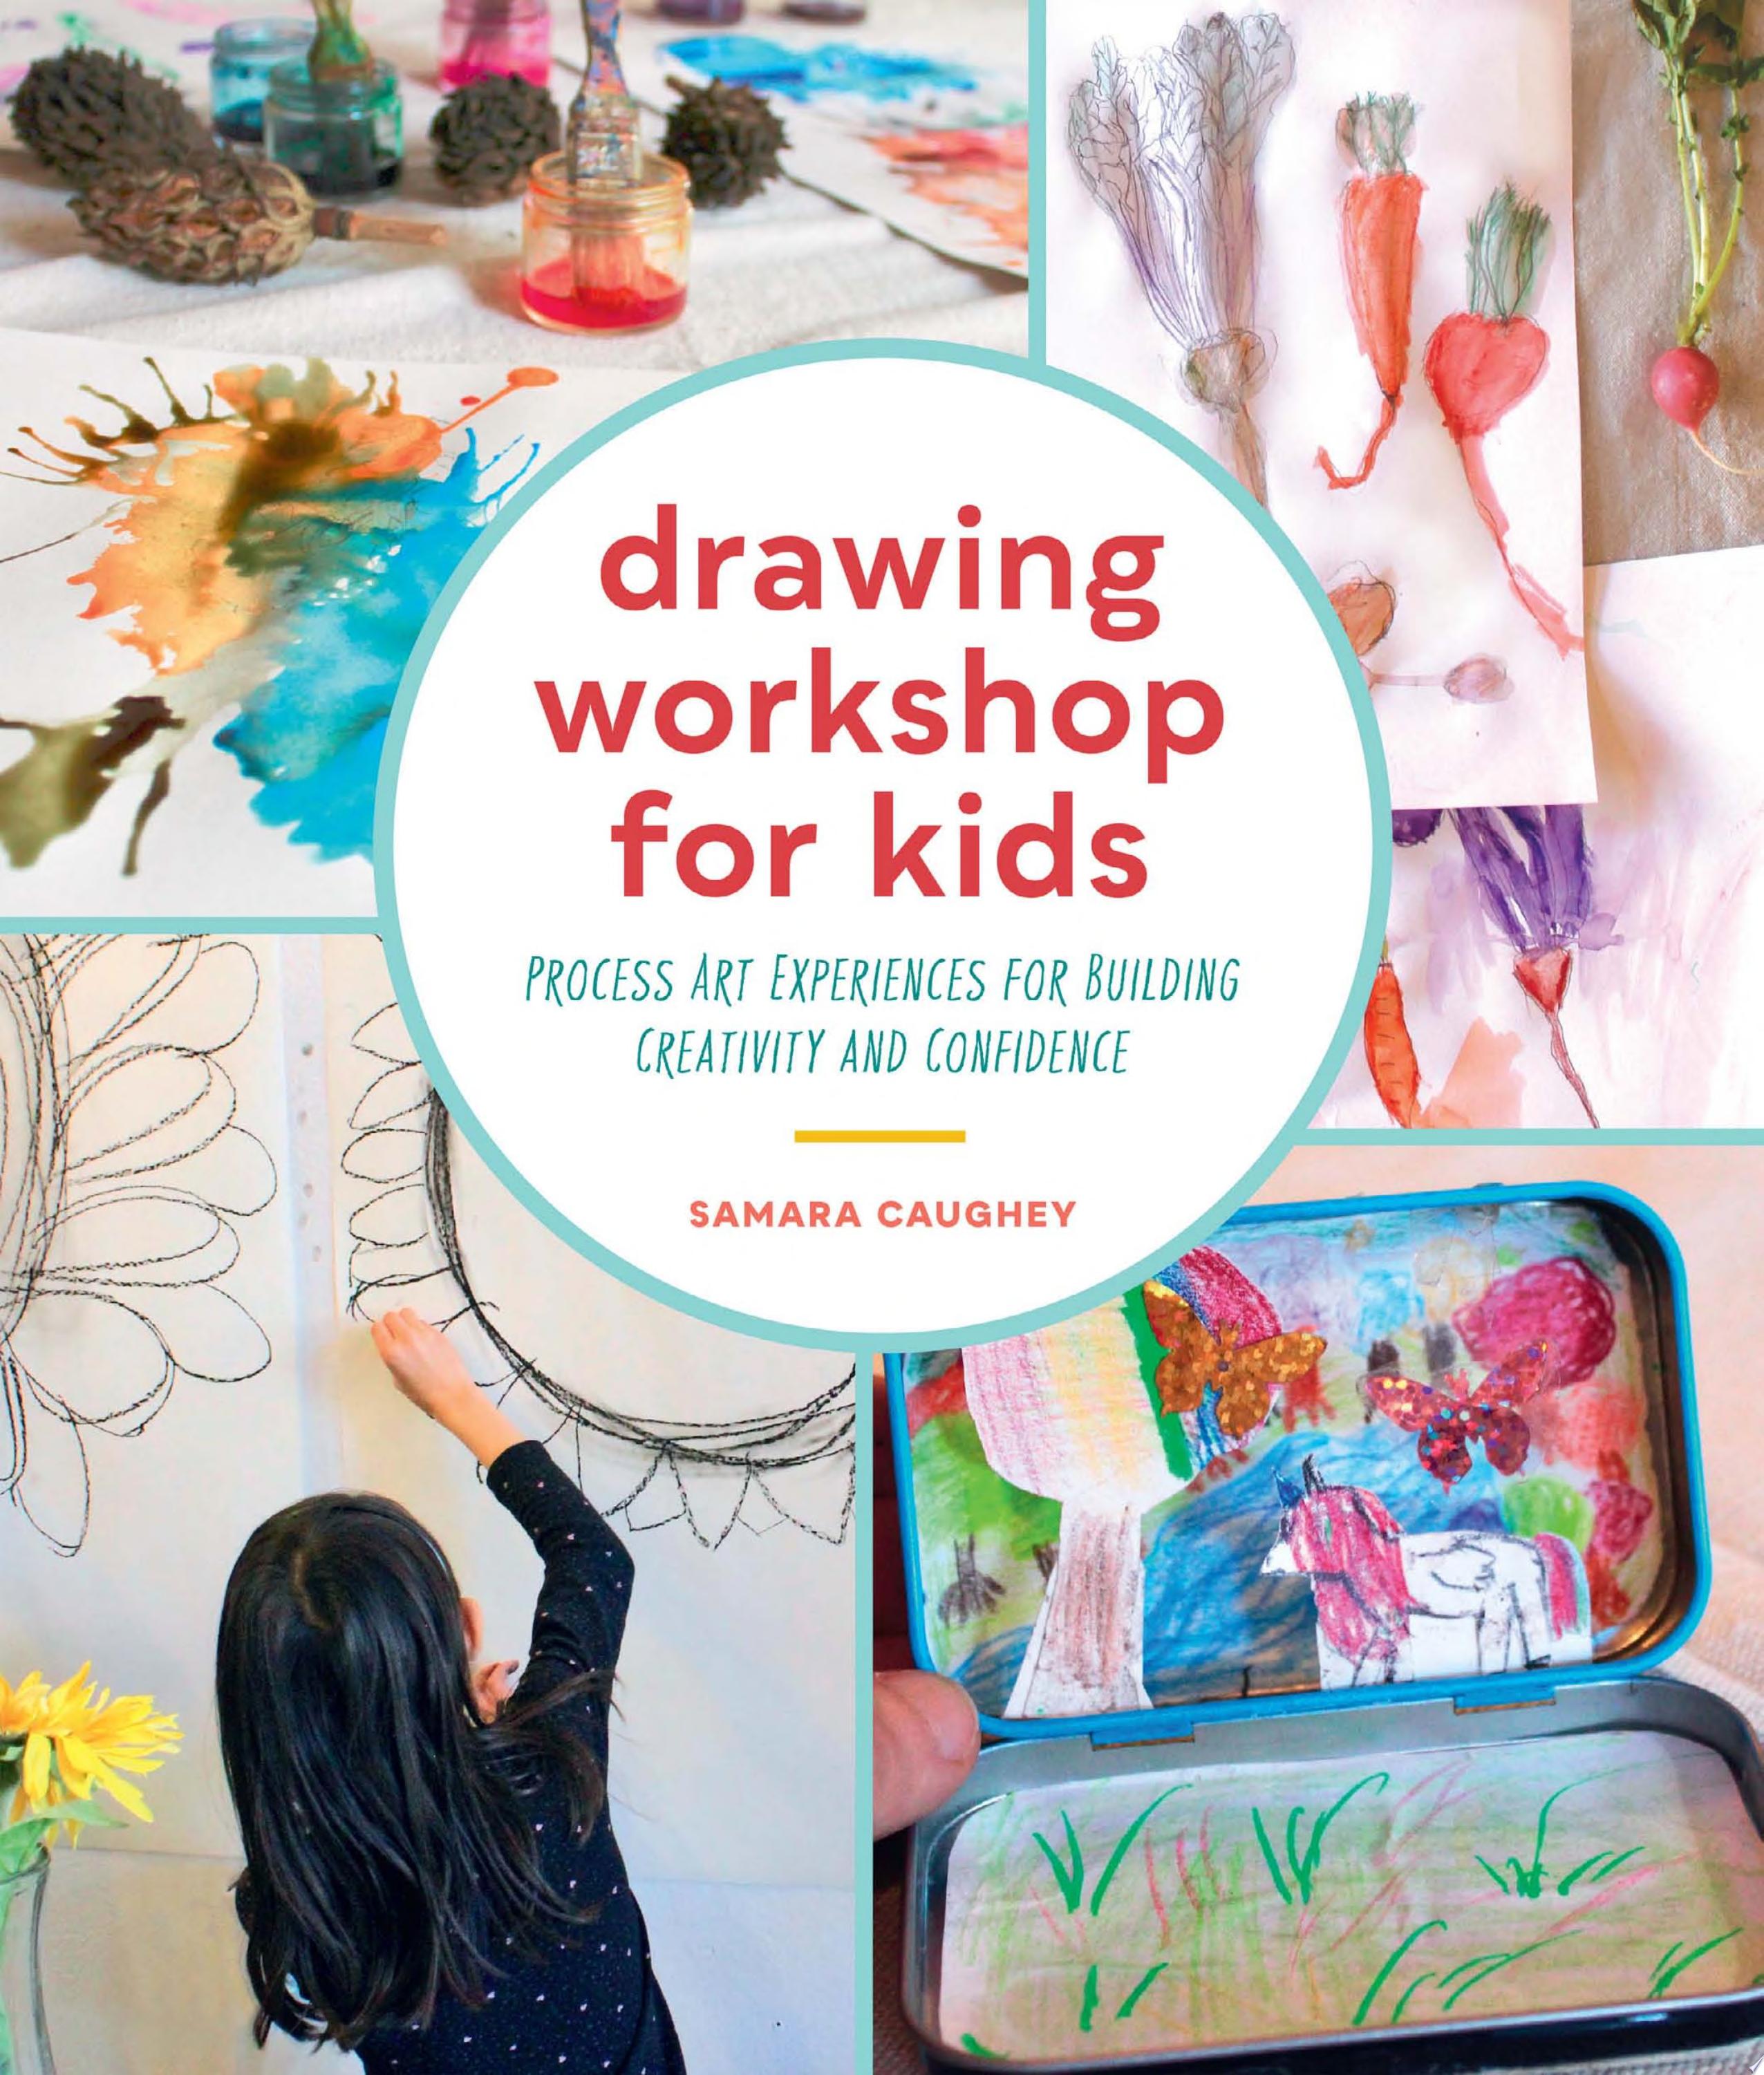 Image for "Drawing Workshop for Kids"